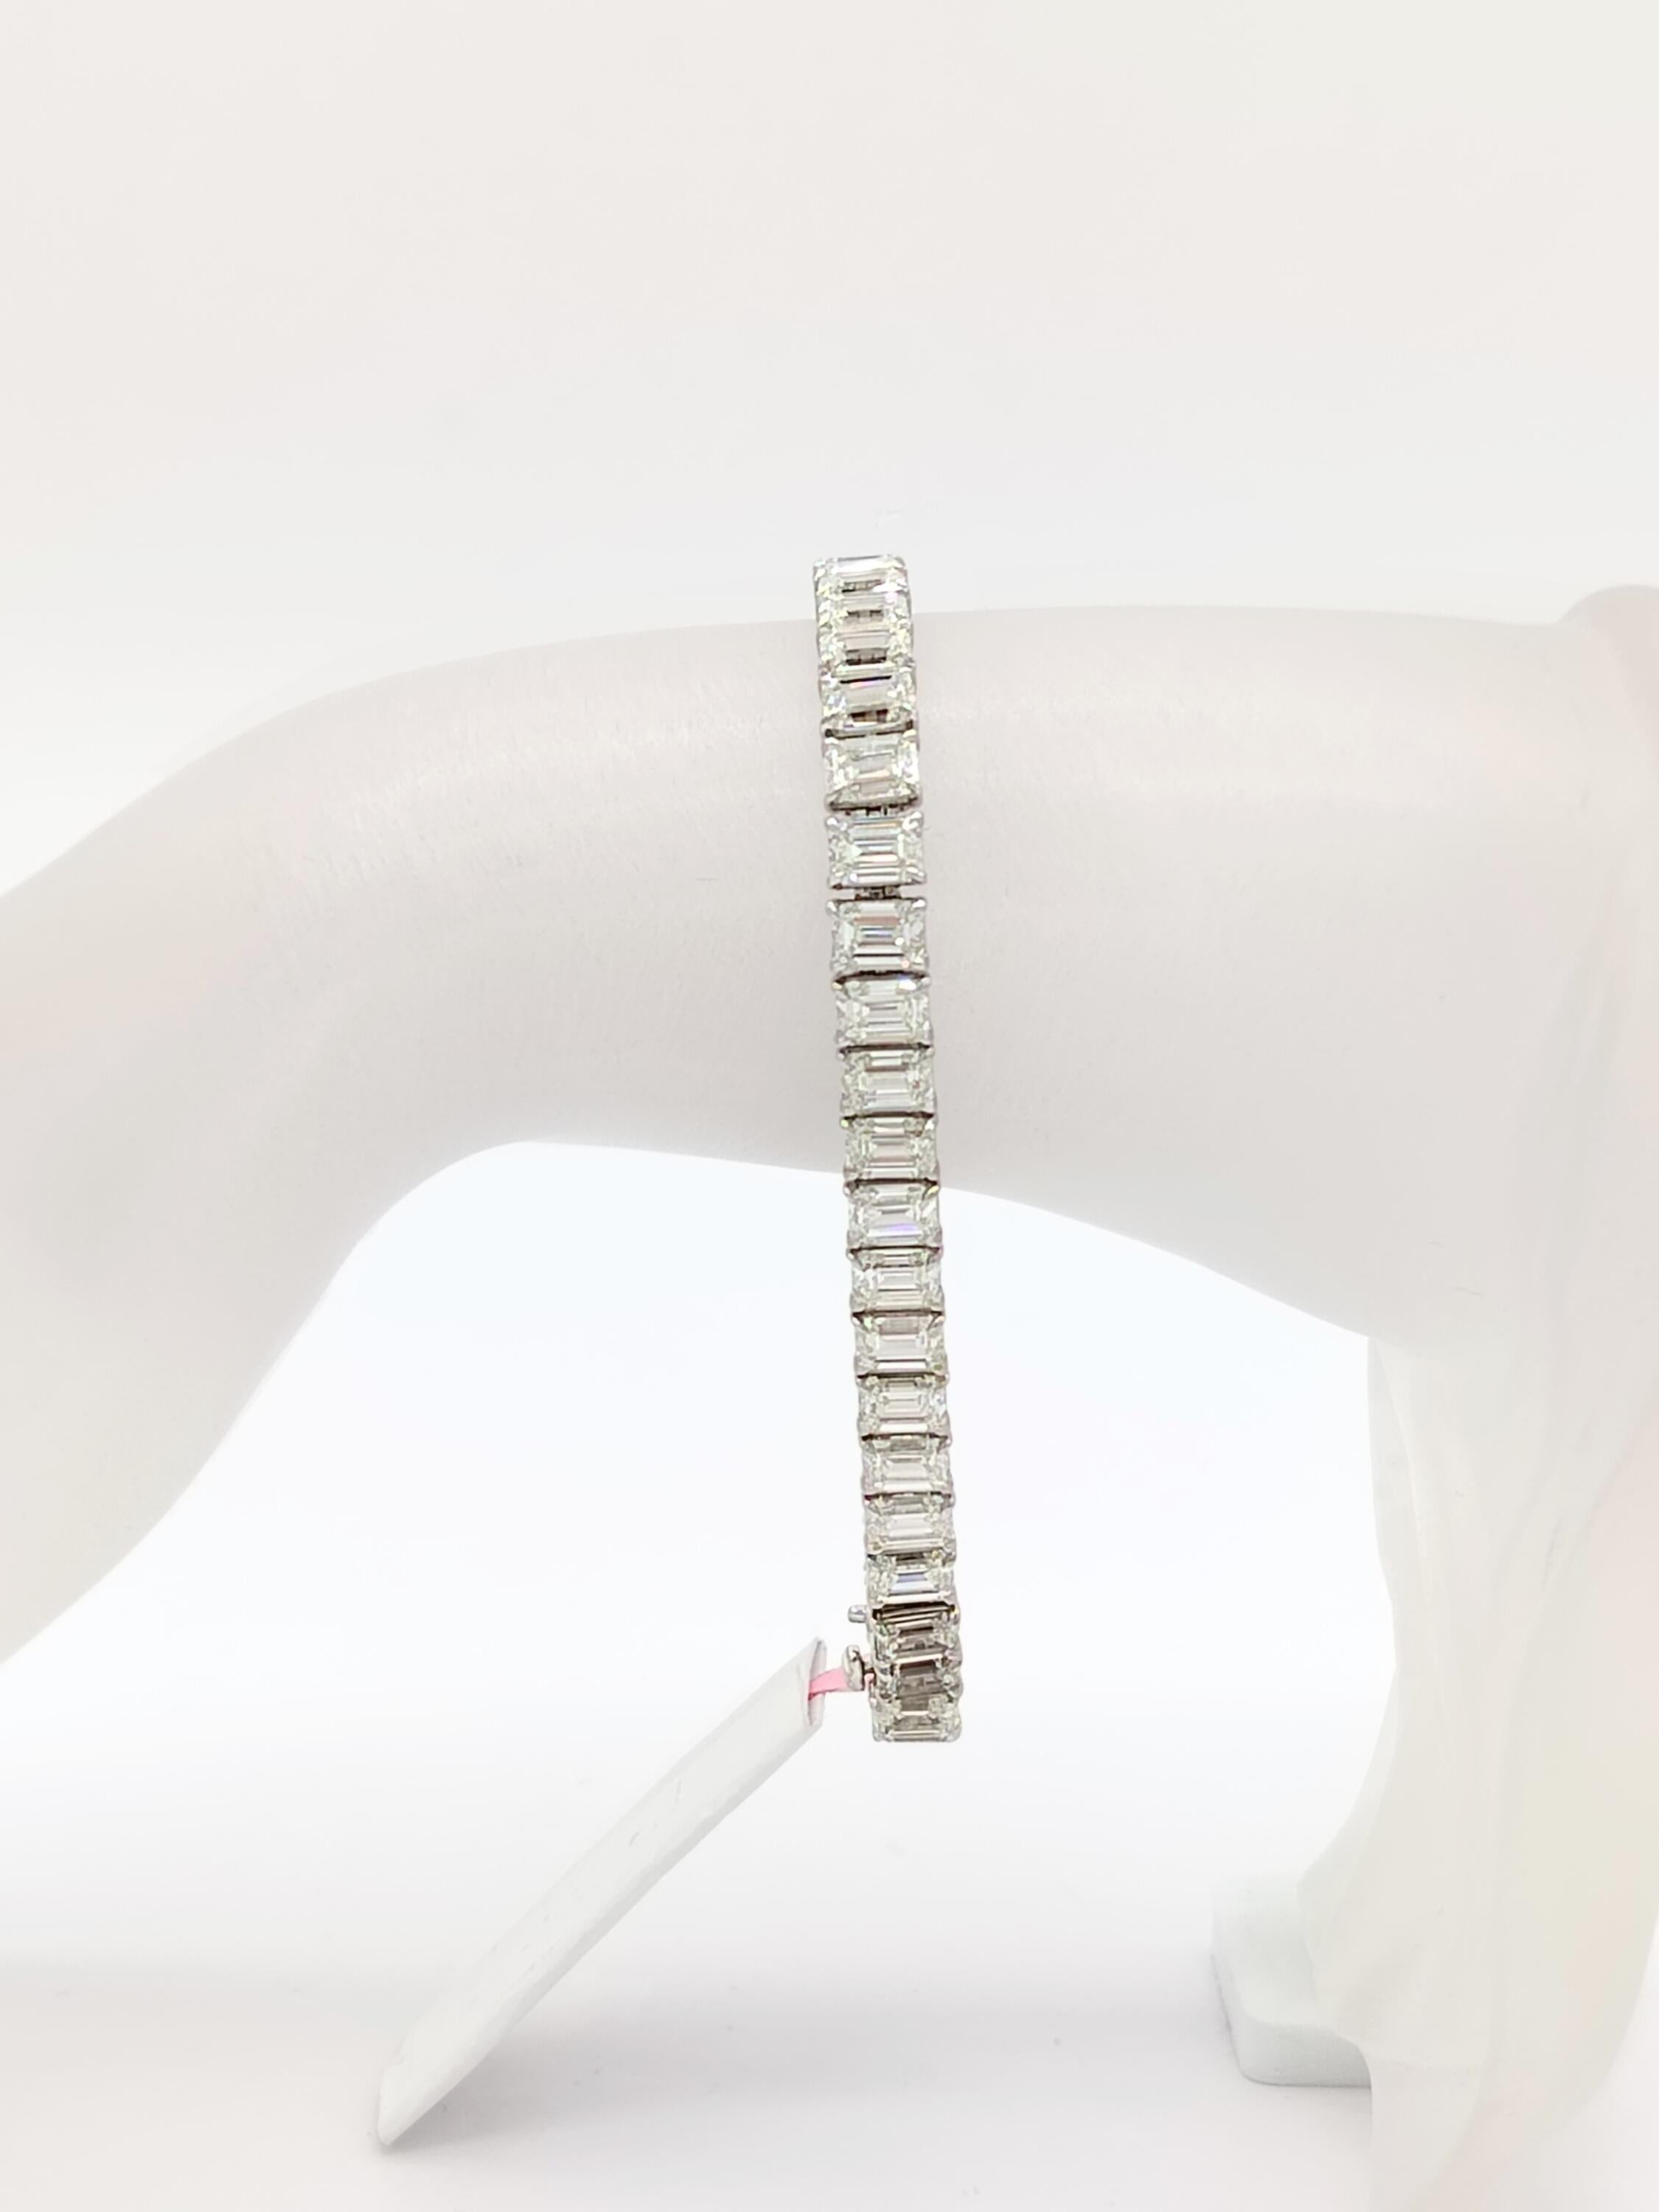 Gorgeous 18.45 ct. HIJ IF VS2 white diamond emerald cut tennis bracelet.  Total of 46 stones.  Handmade in 18k white gold.  Length is 7